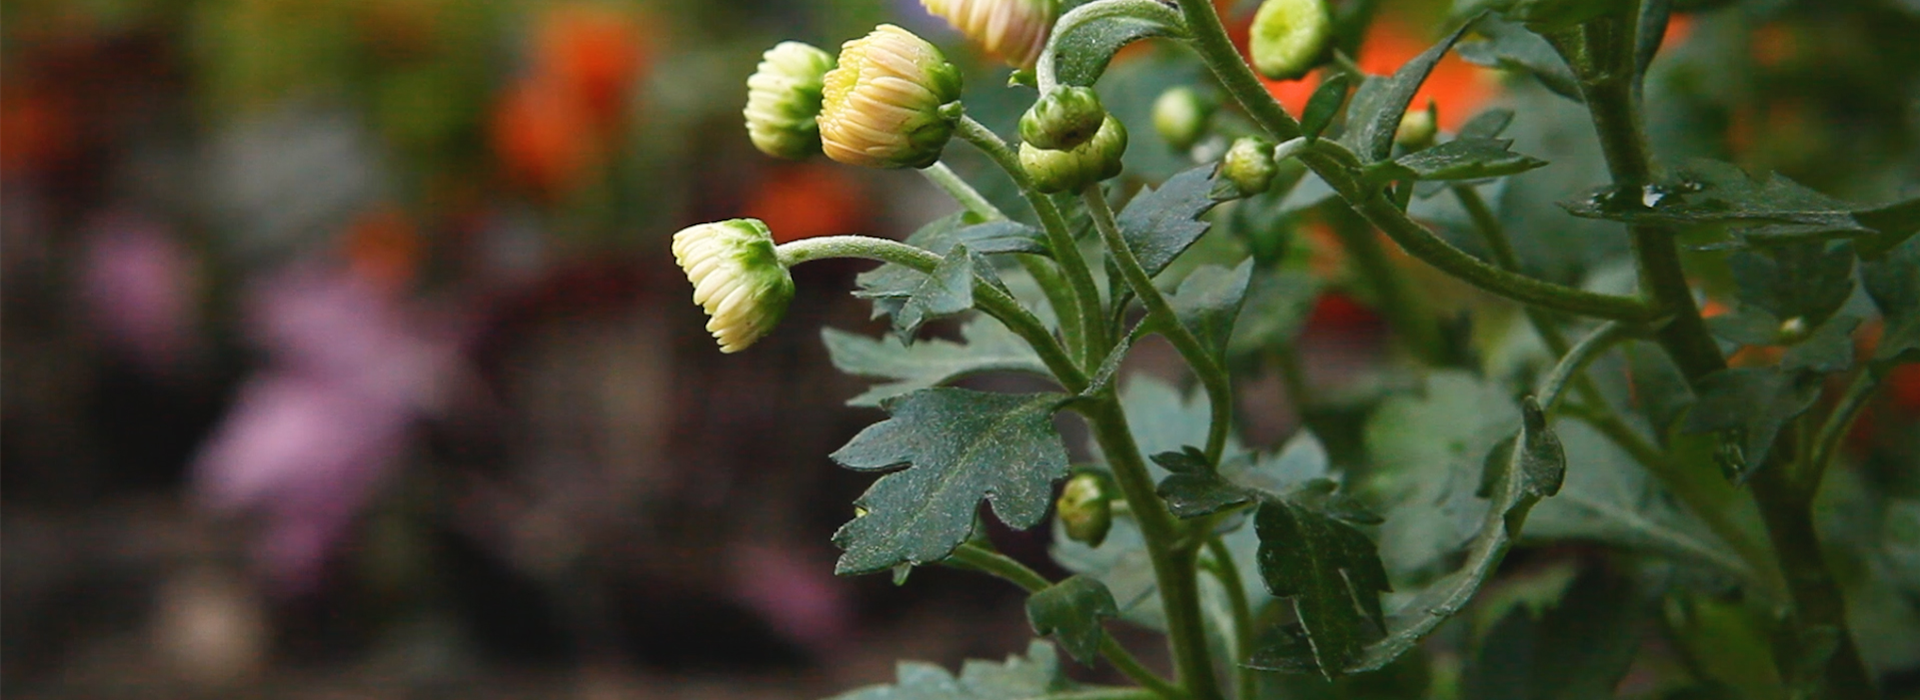 Chrysanthemen - Einpflanzen im Garten (Thumbnail)